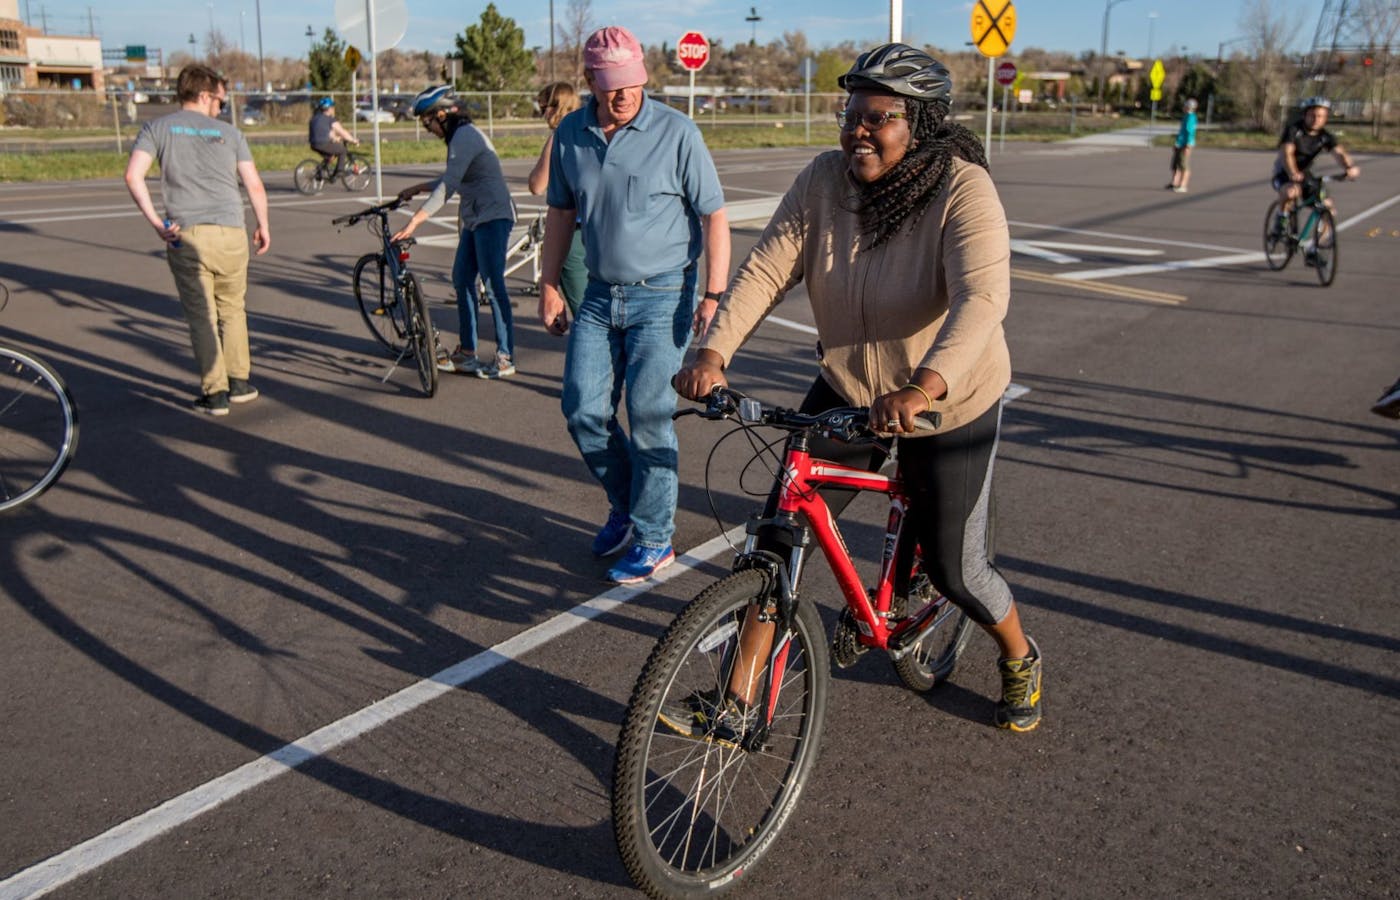 First Ride: Teaching Adults to Bike